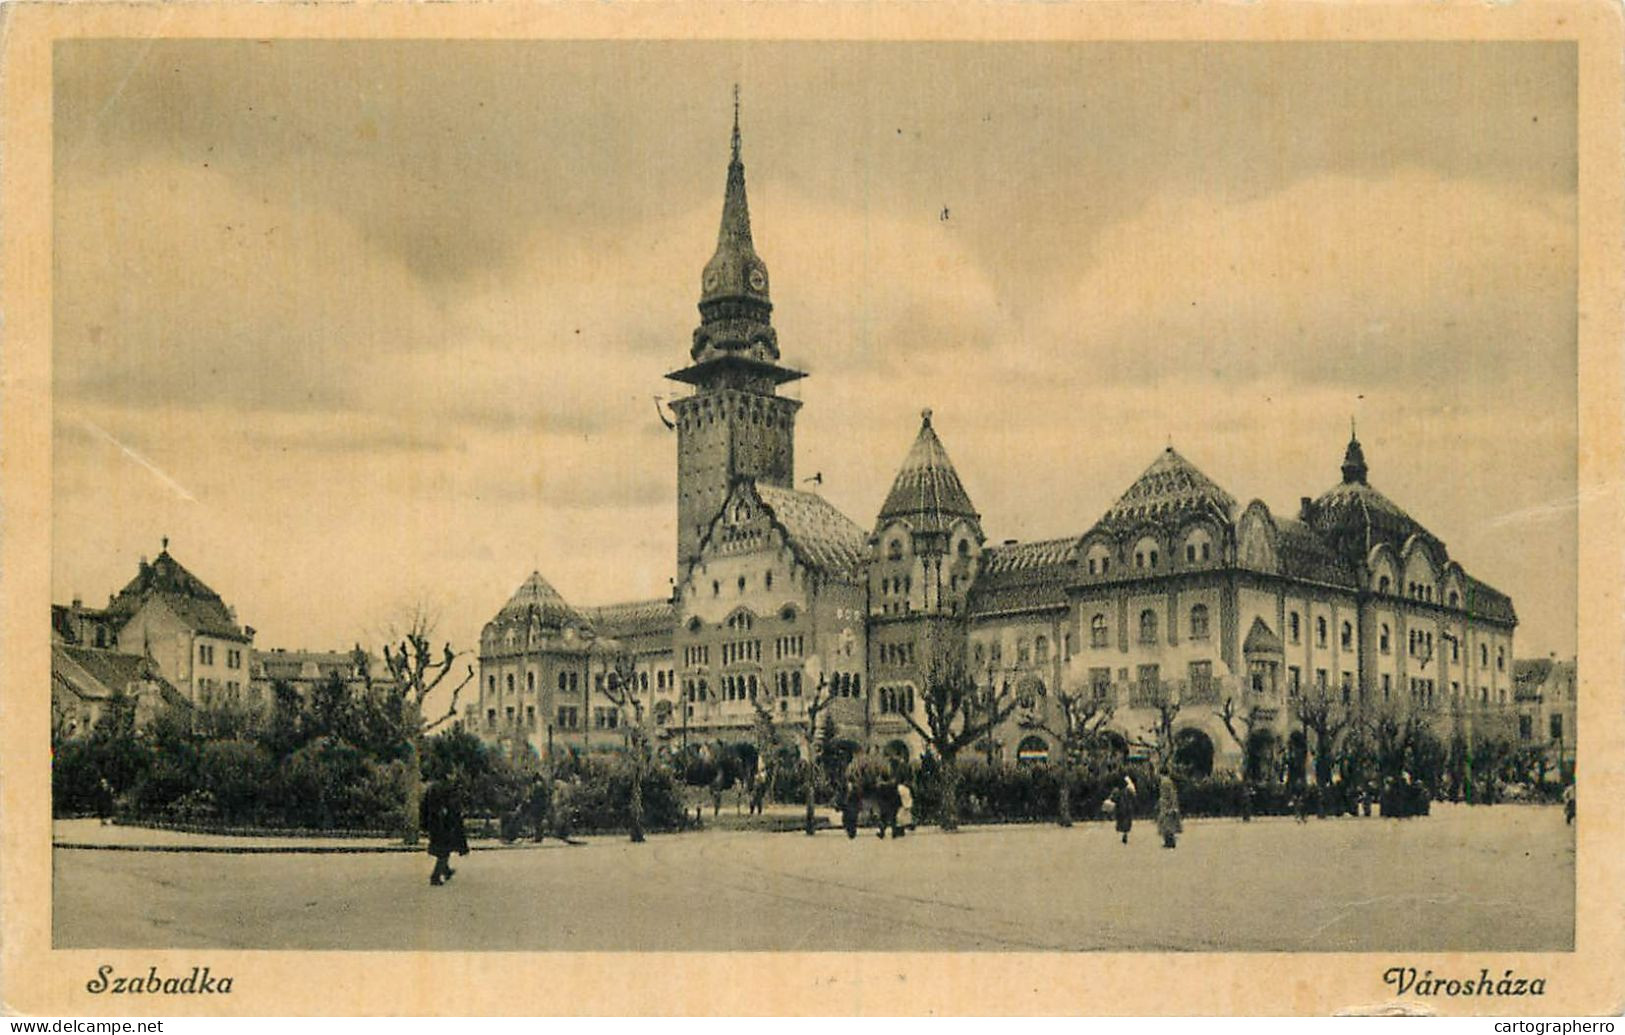 Serbia Subotica Town Hall - Servië